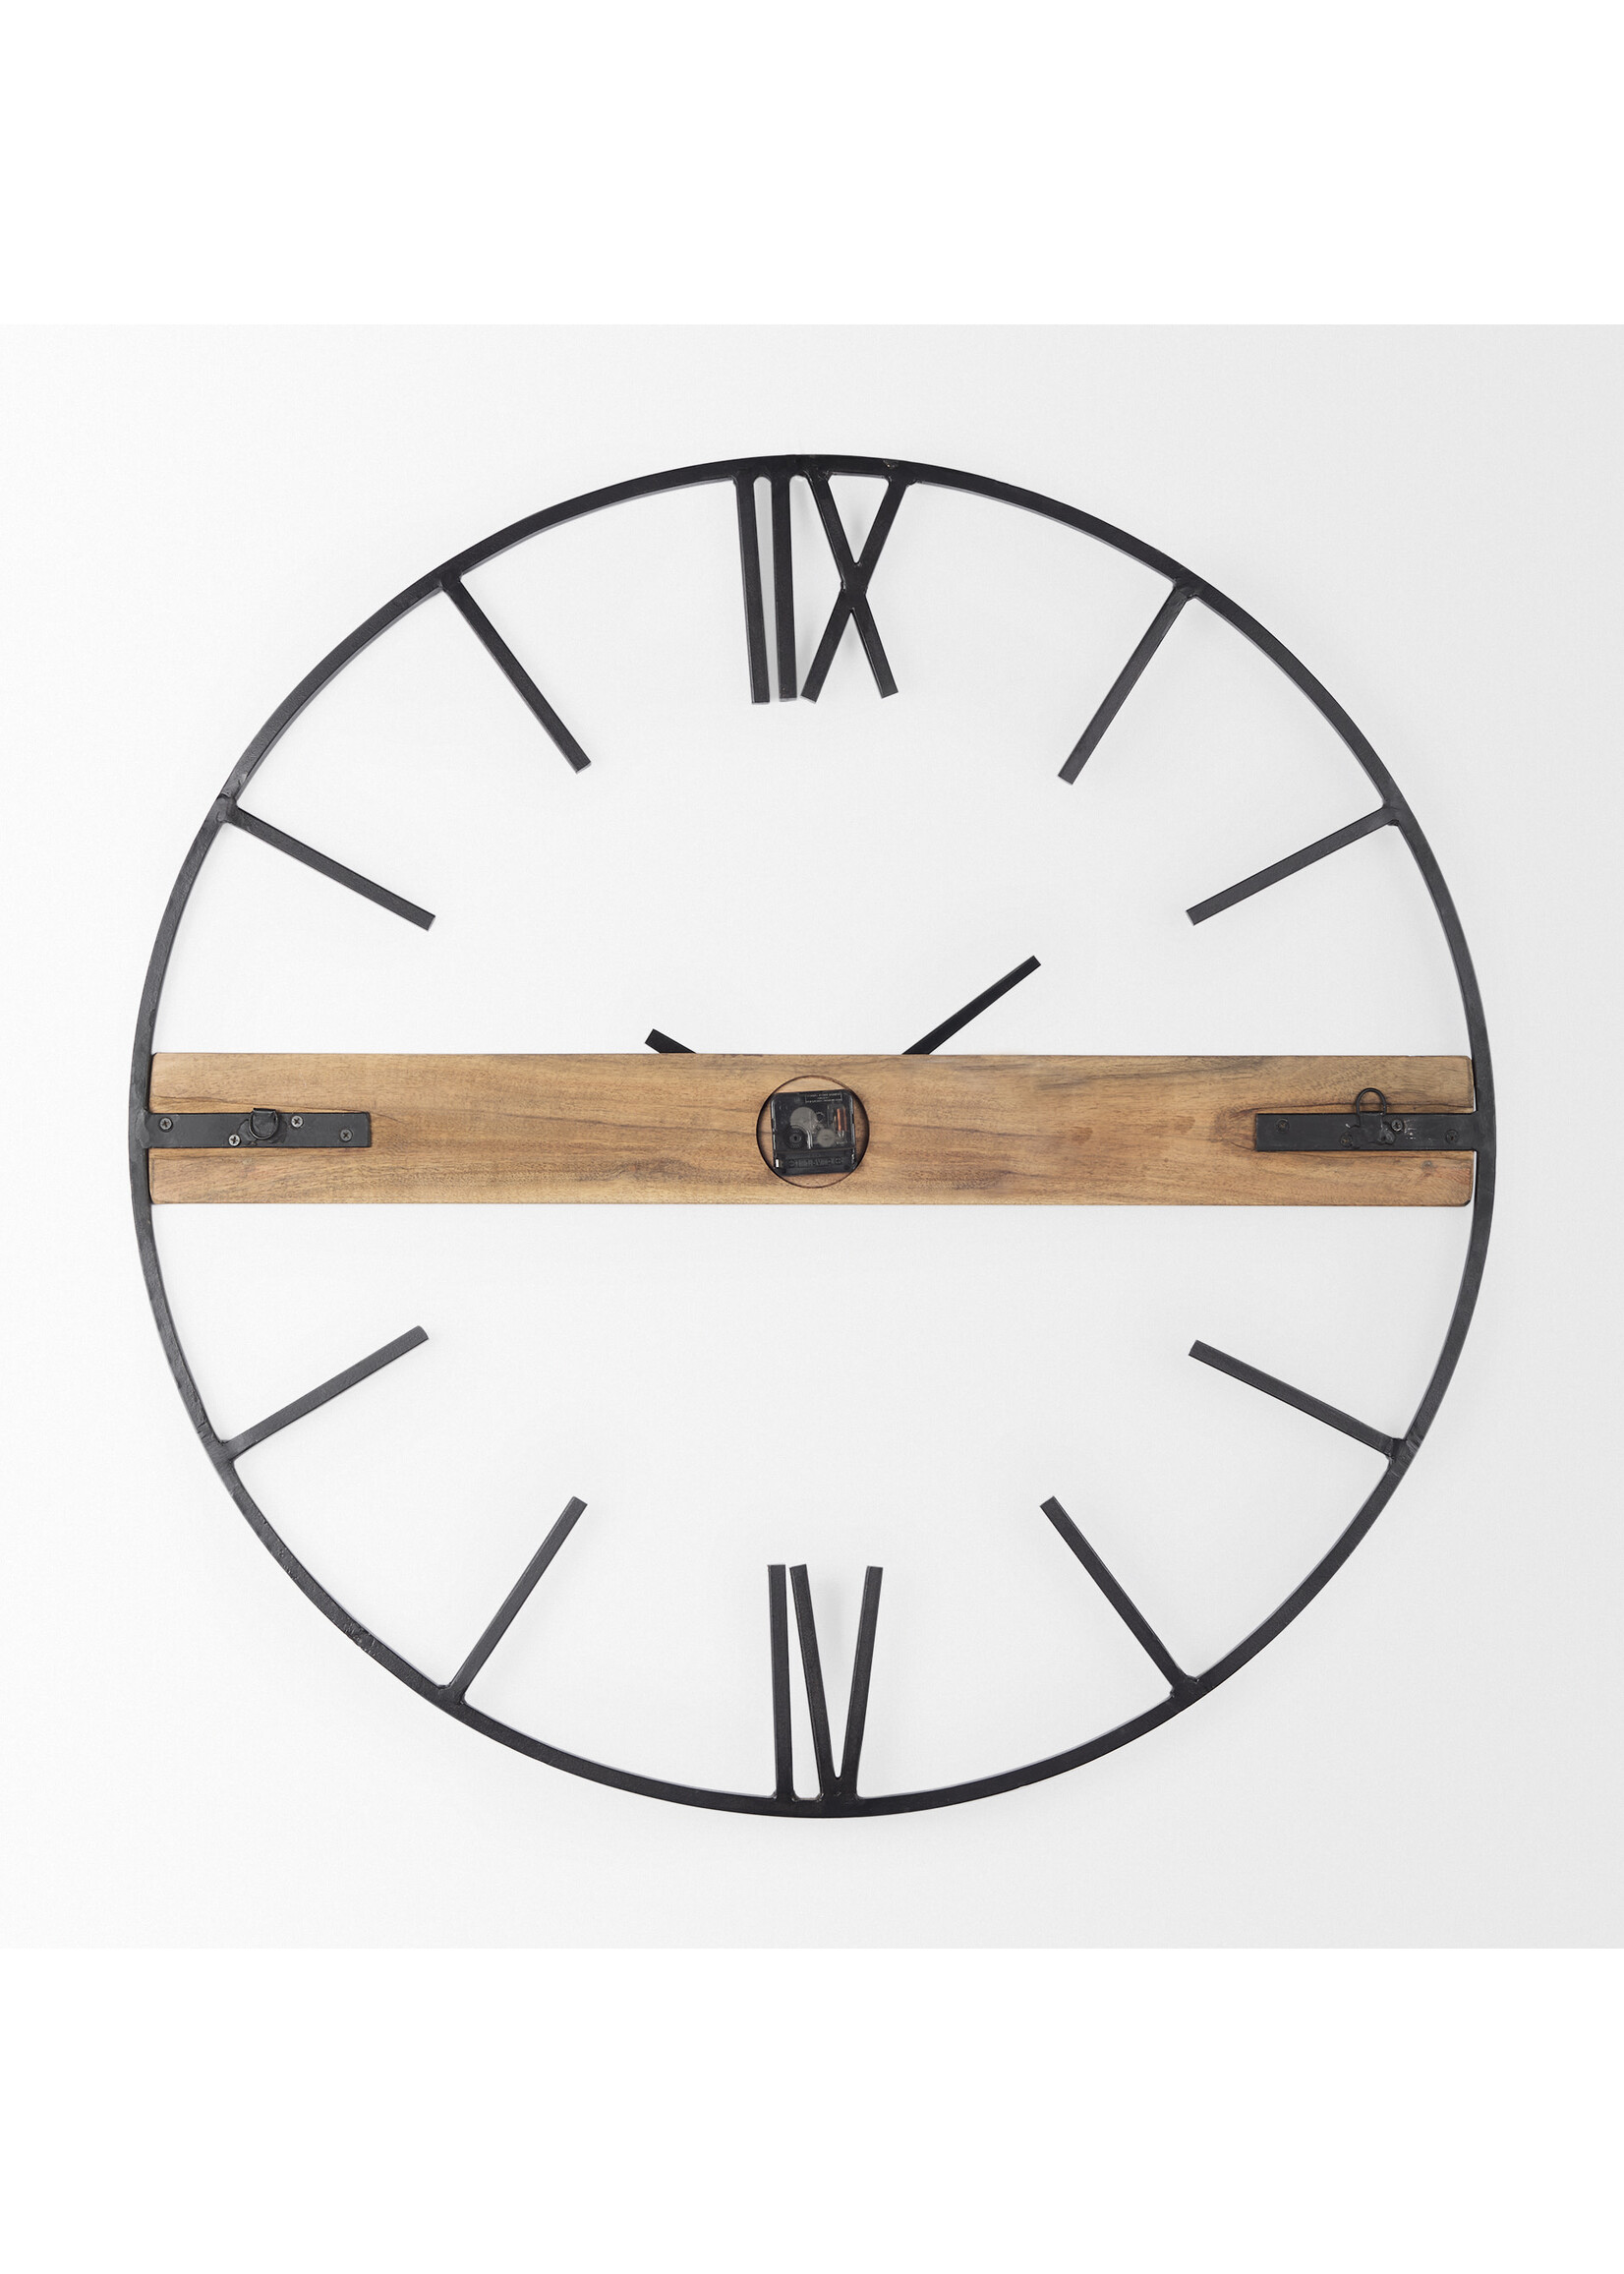 Metal and Wood Industrial Wall Clock